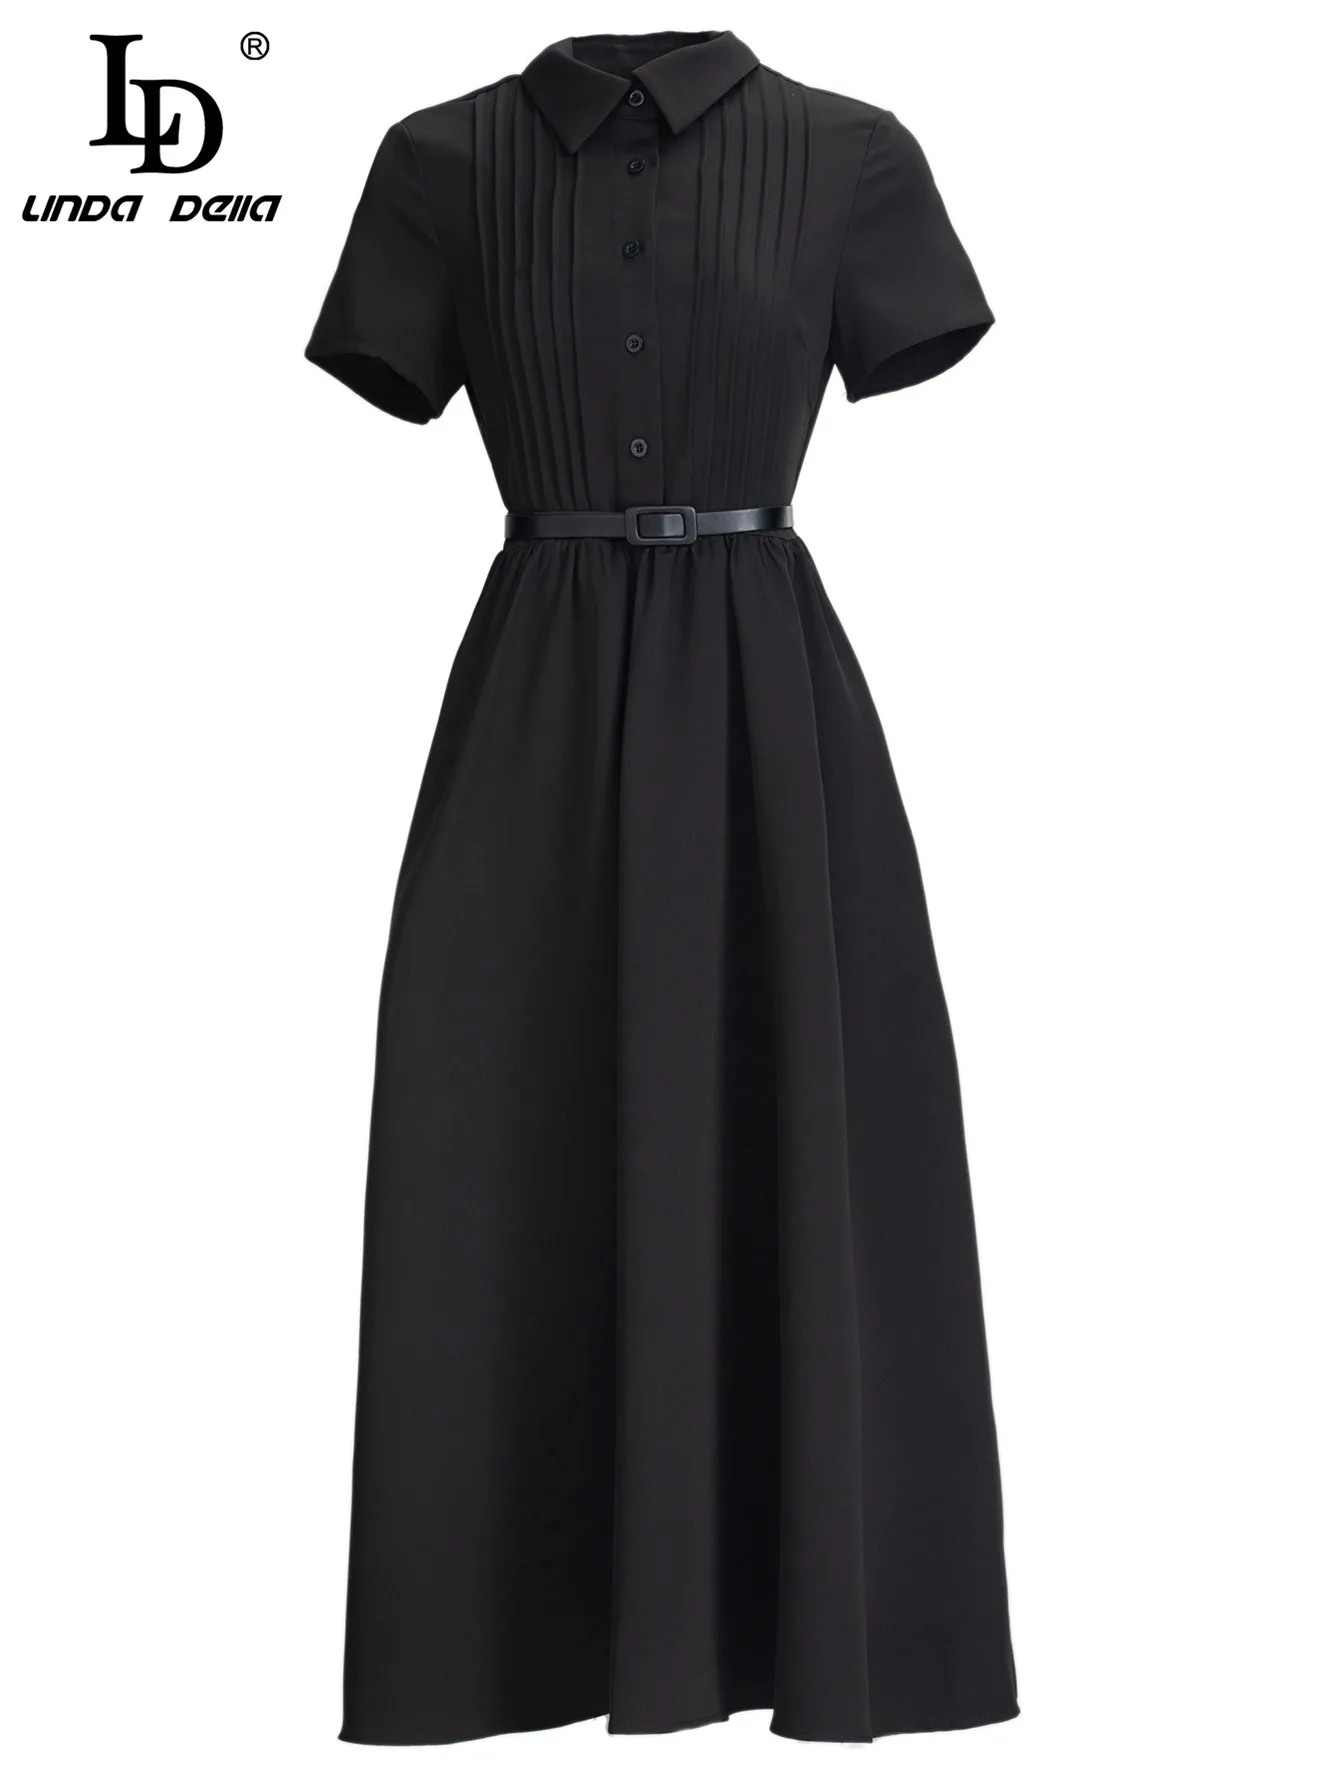 LD LINDA DELLA Fashion Designer Summer Dress Women Turn-down Collar Single-breasted Sashes High waist Black Midi Dress